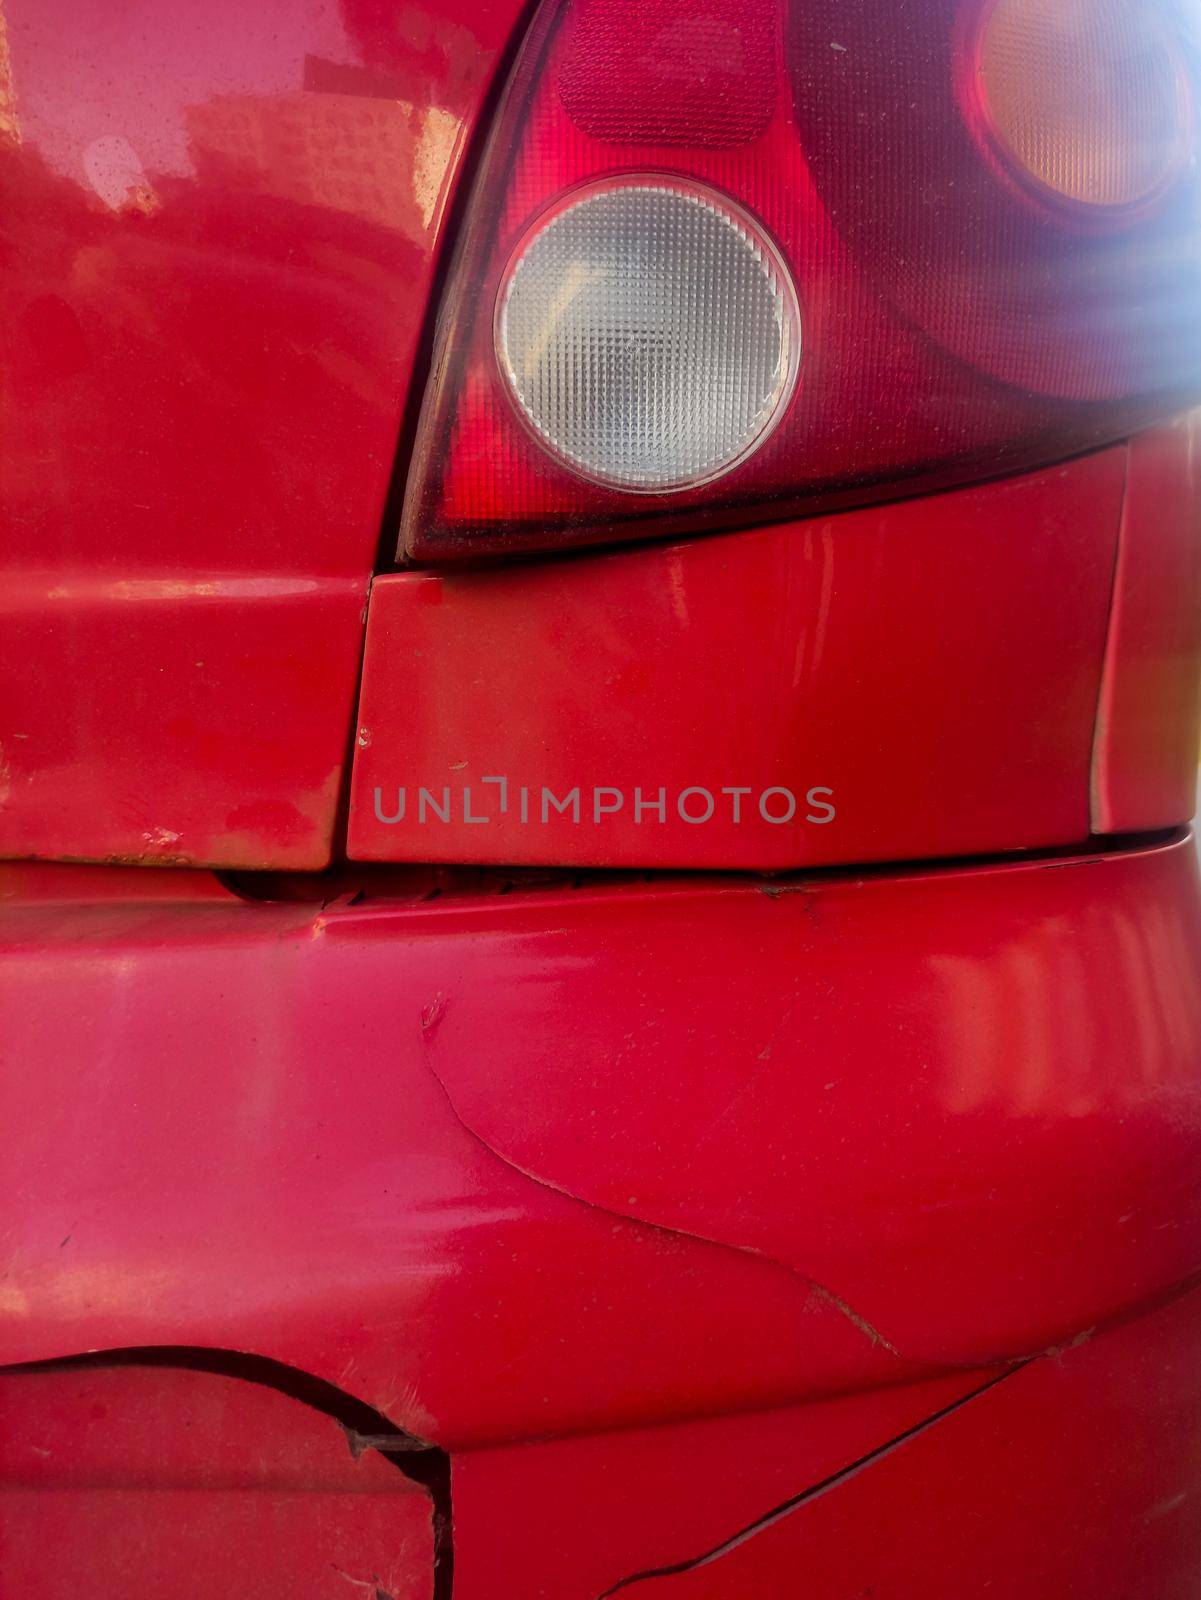 Red broken car detail. Damaged old car close up. High quality photo